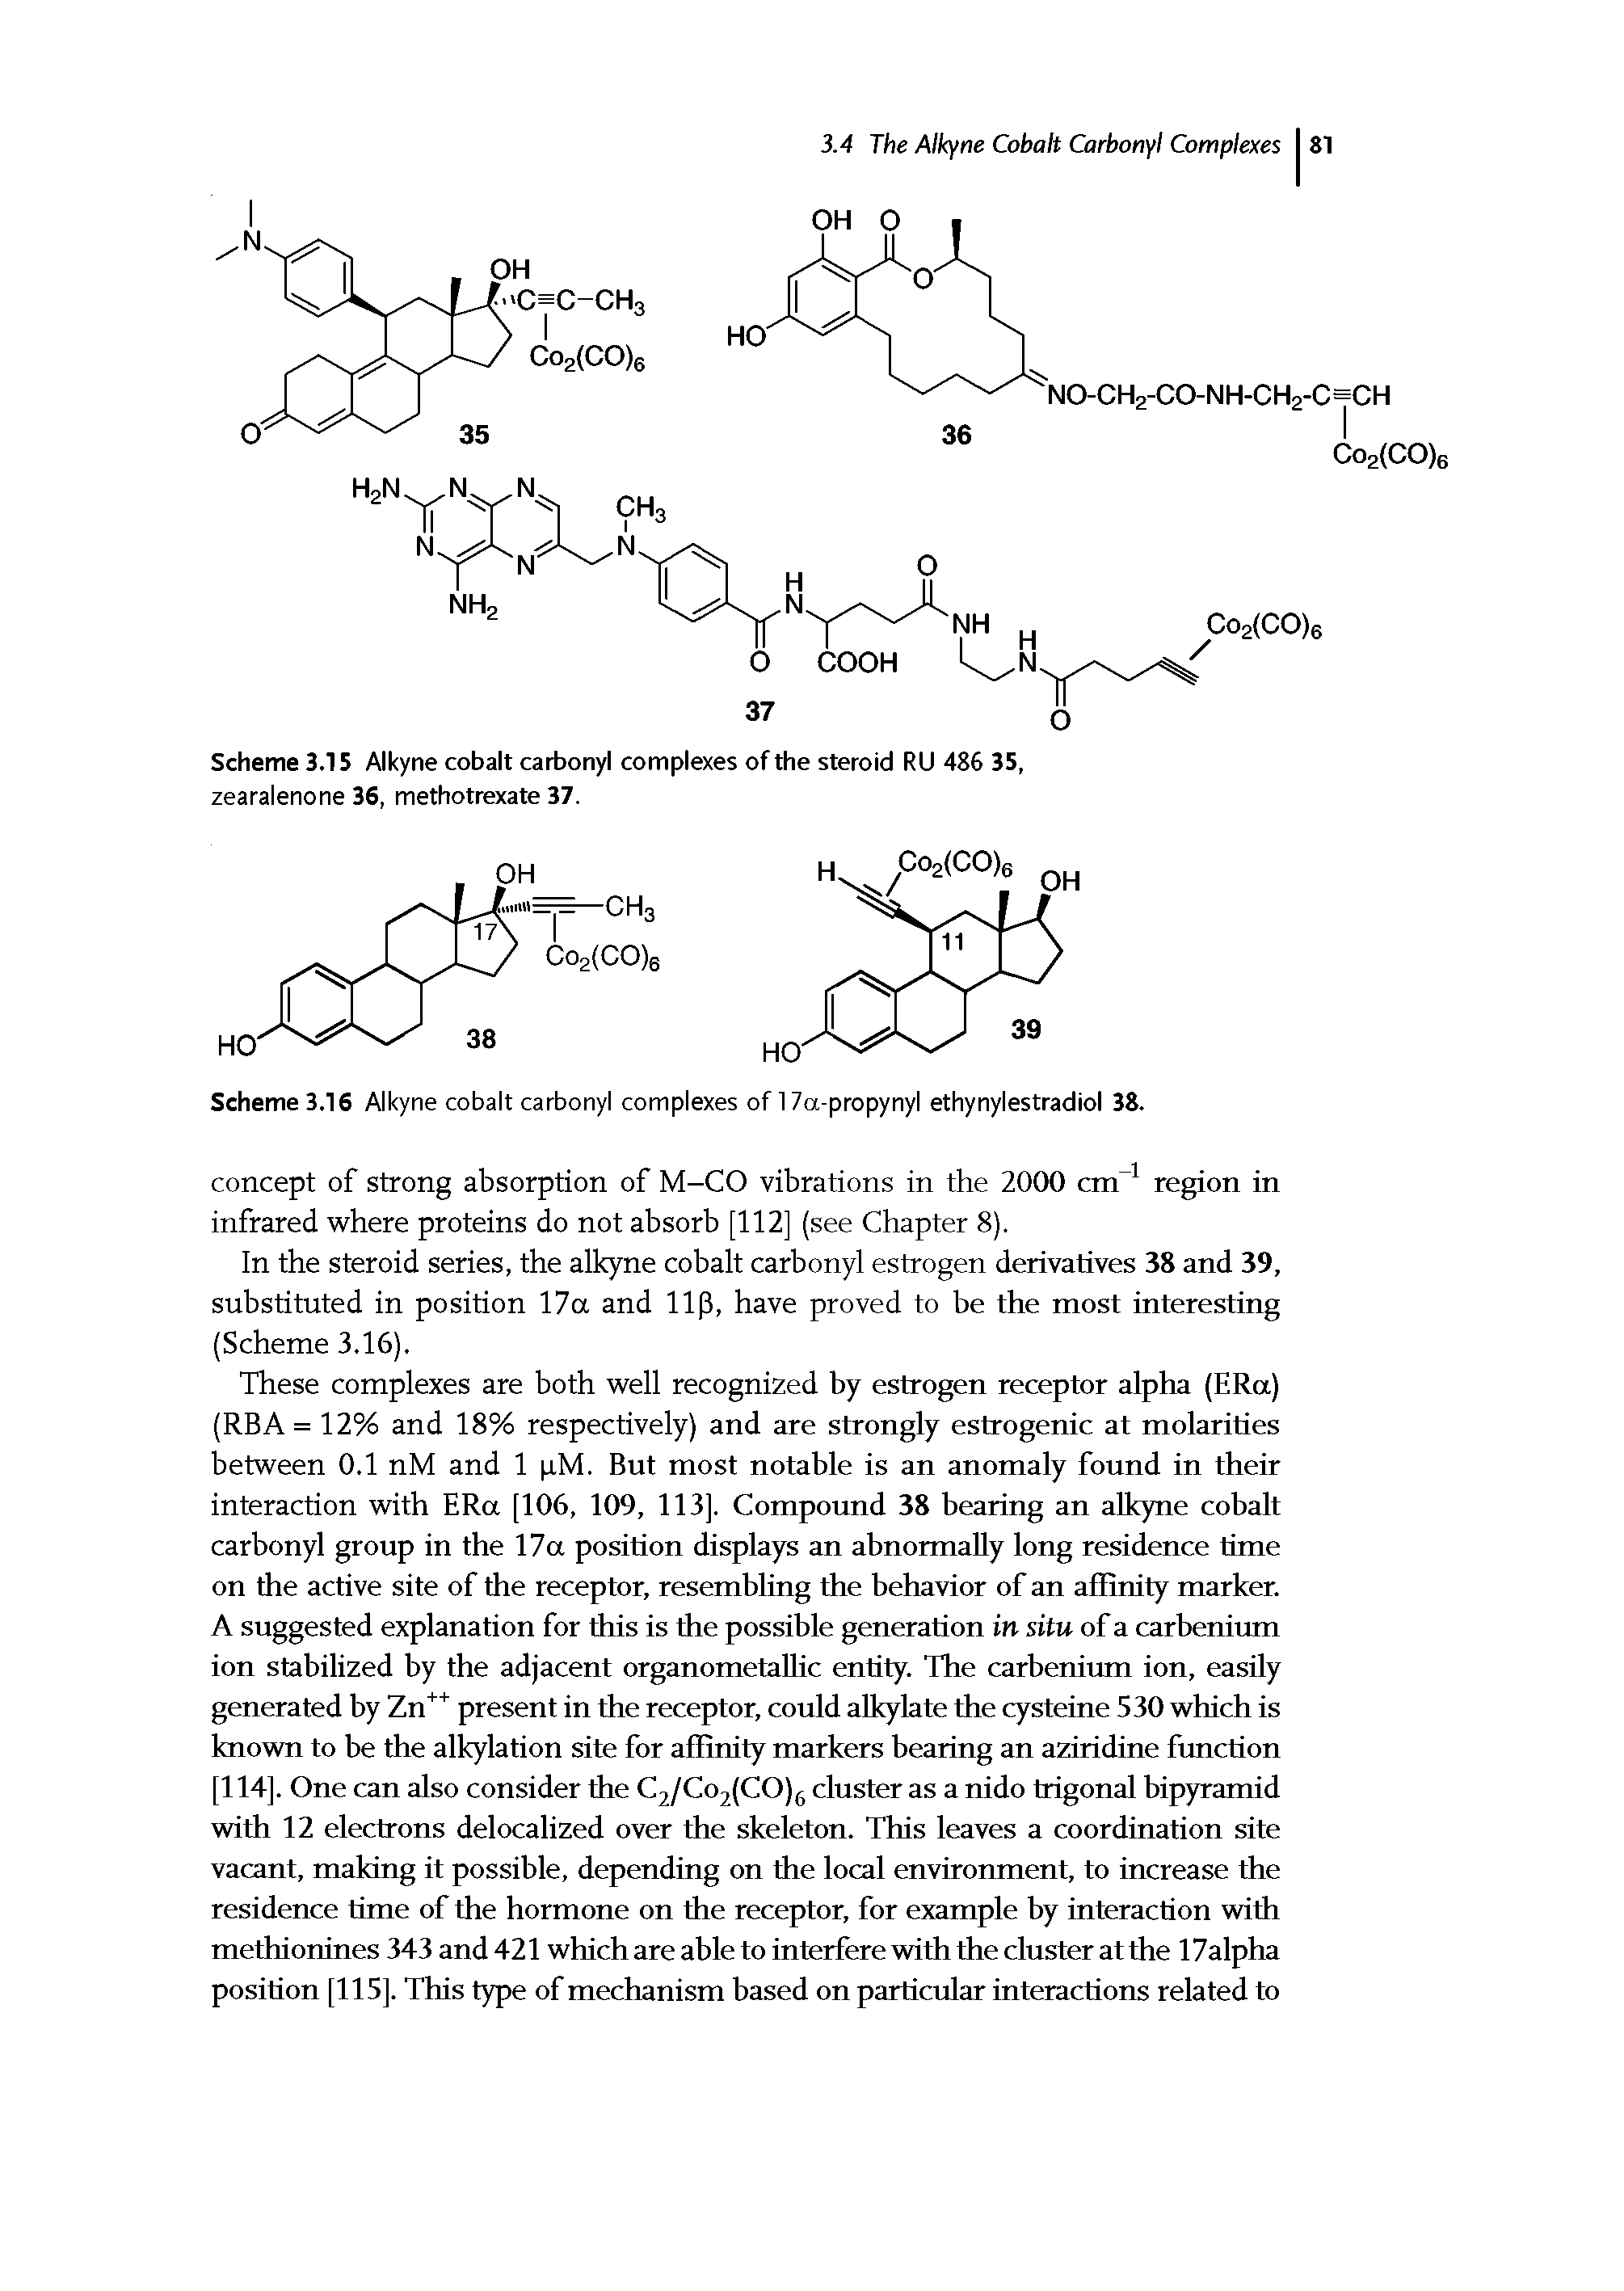 Scheme 3.1 S Alkyne cobalt carbonyl complexes of the steroid RU 486 35, zearalenone 36, methotrexate 37.